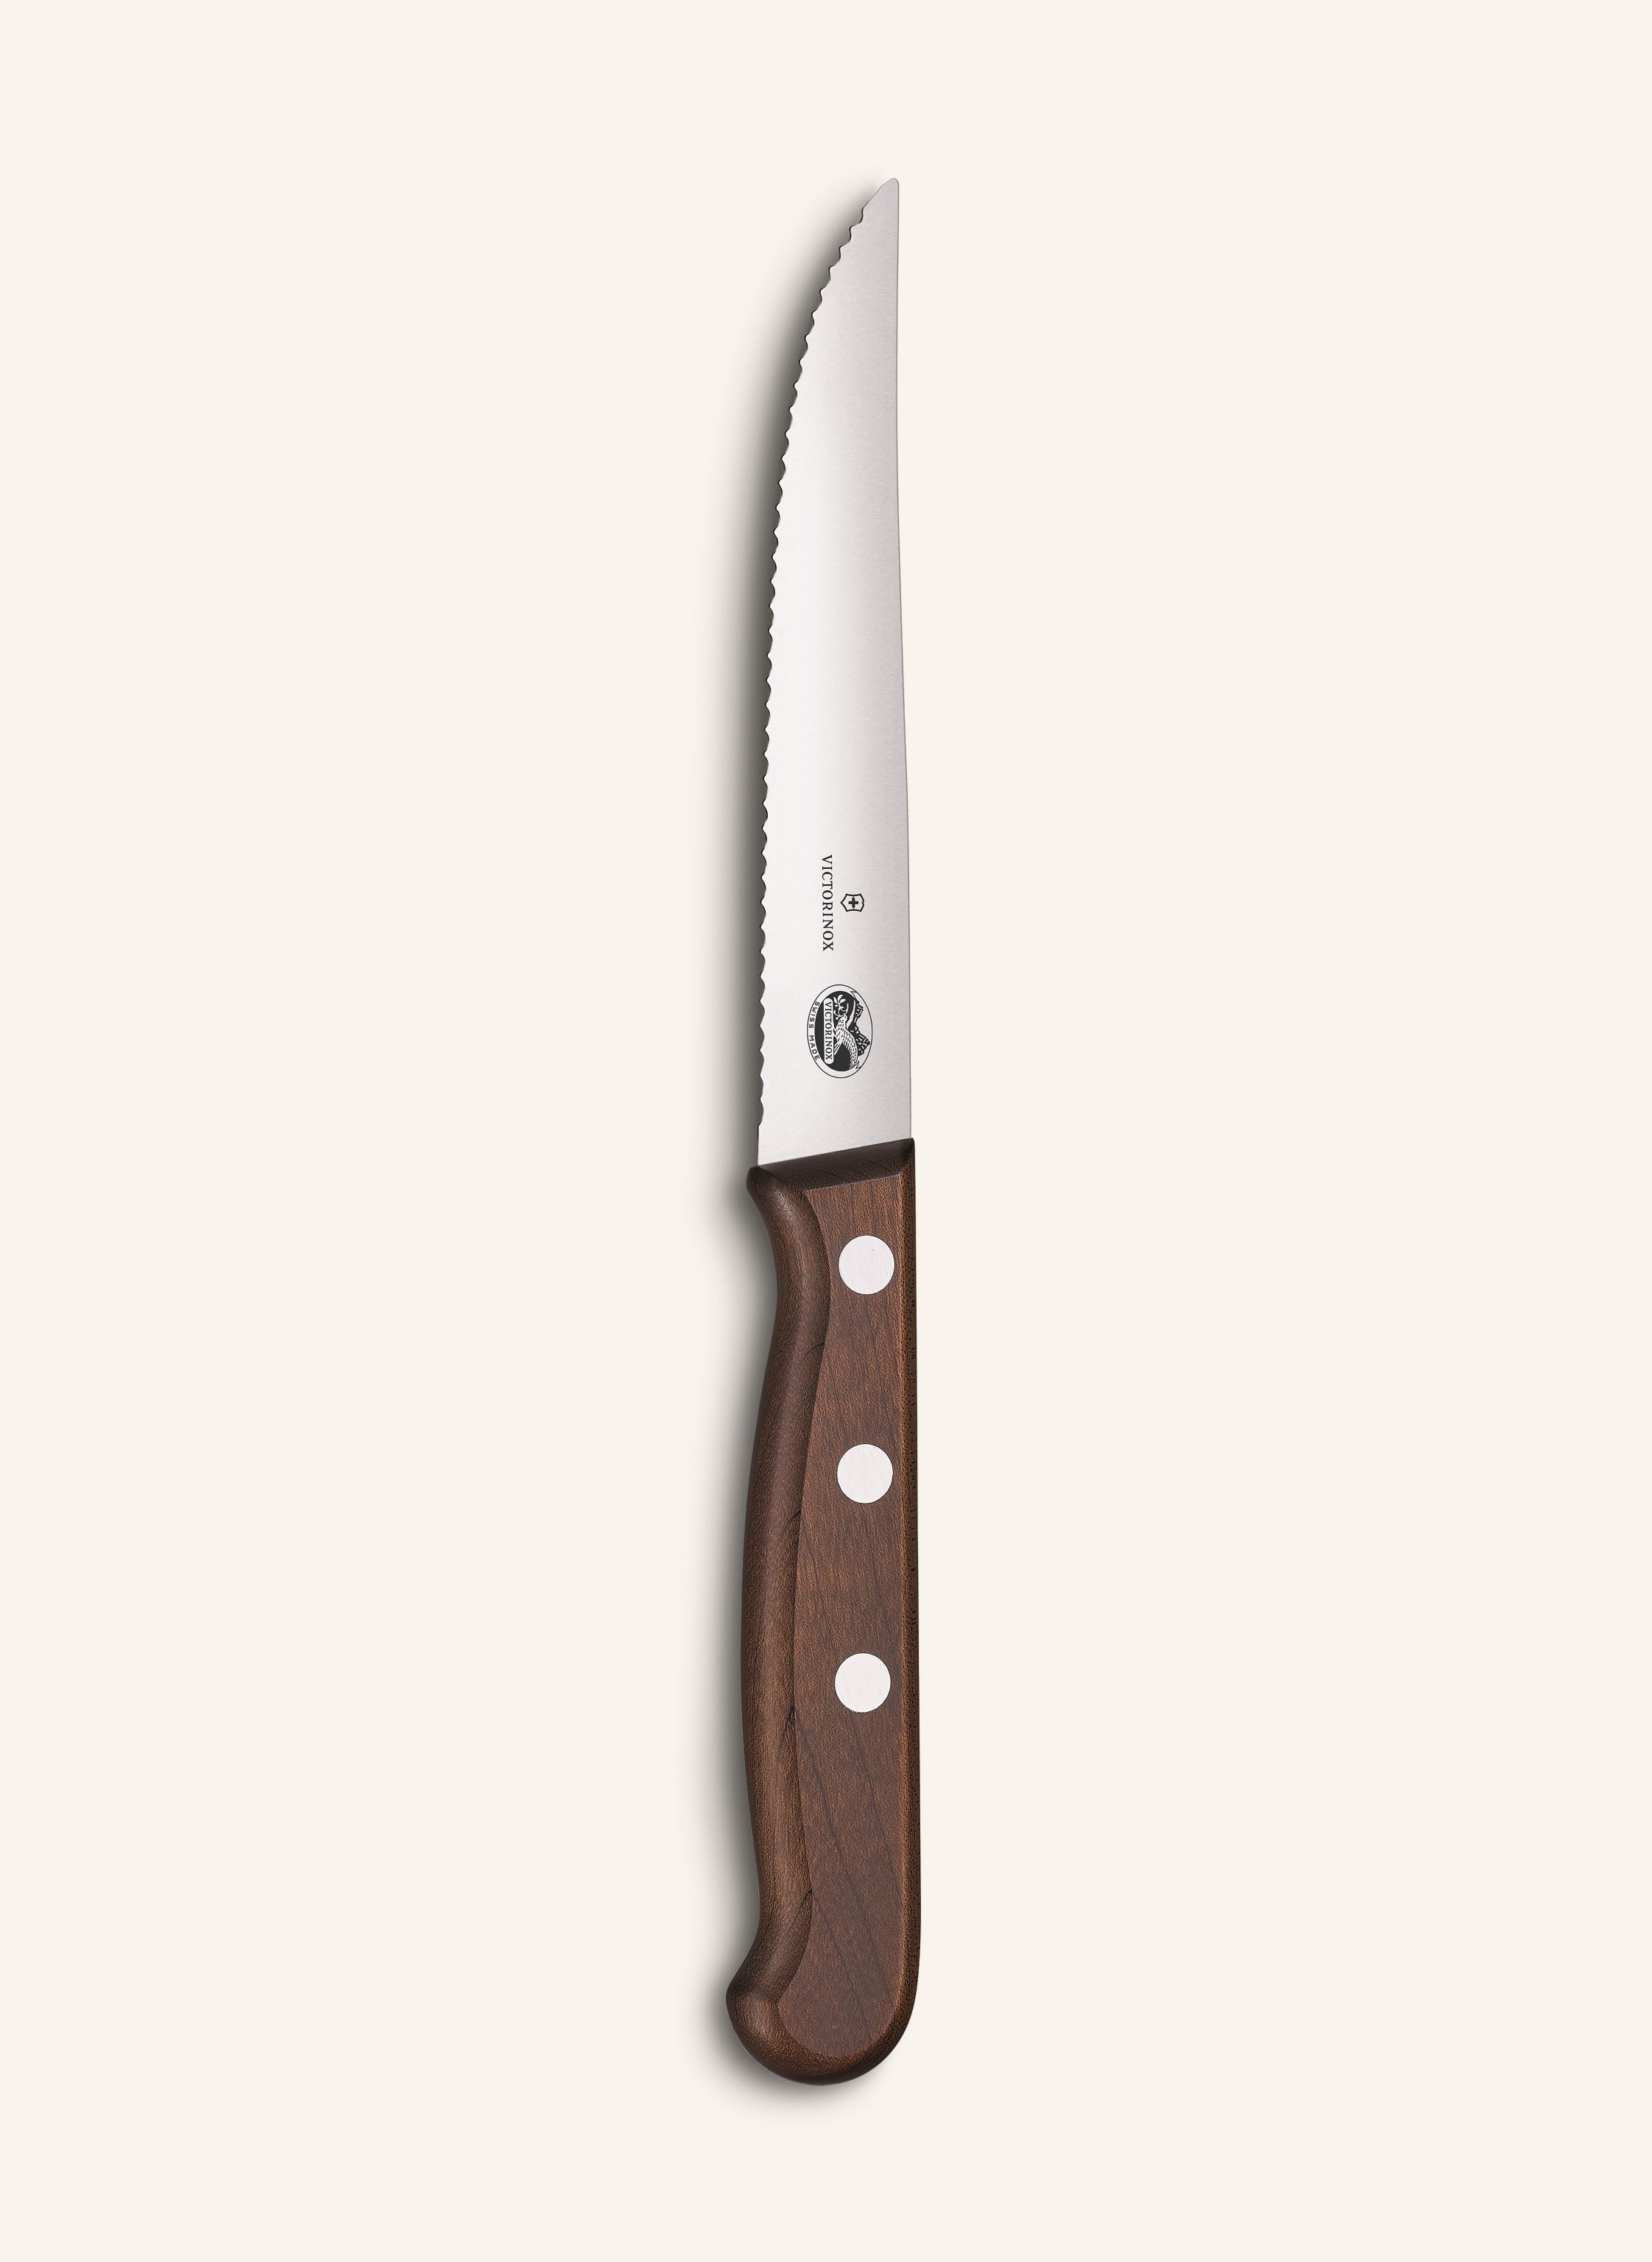 Victorinox Swiss Modern Serrated Steak Knife Set, 12cm, Set Of 2